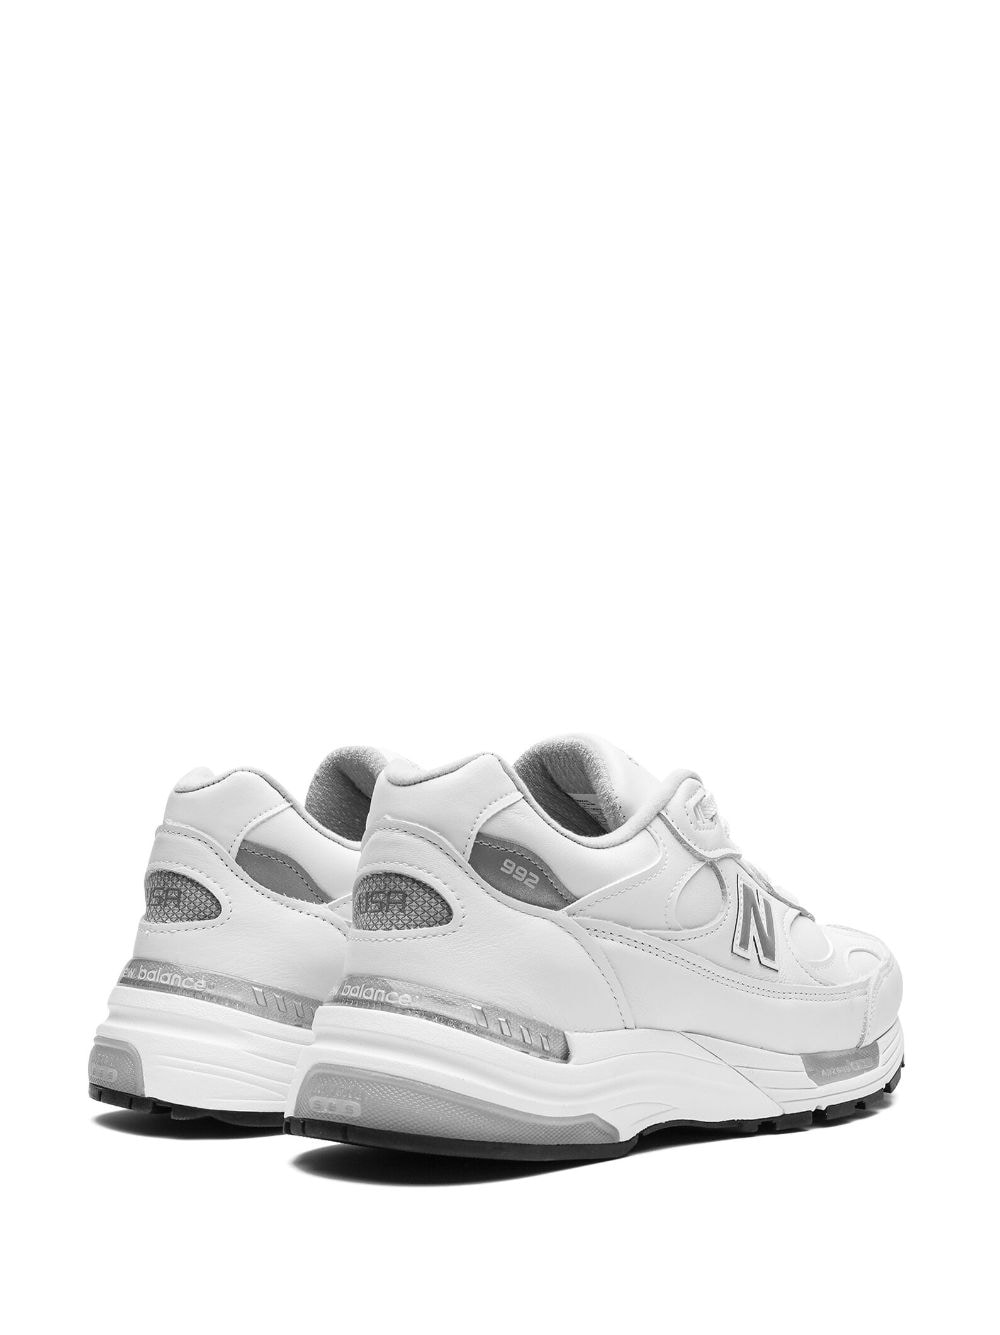 Shop New Balance 992 "miusa White/silver" Sneakers